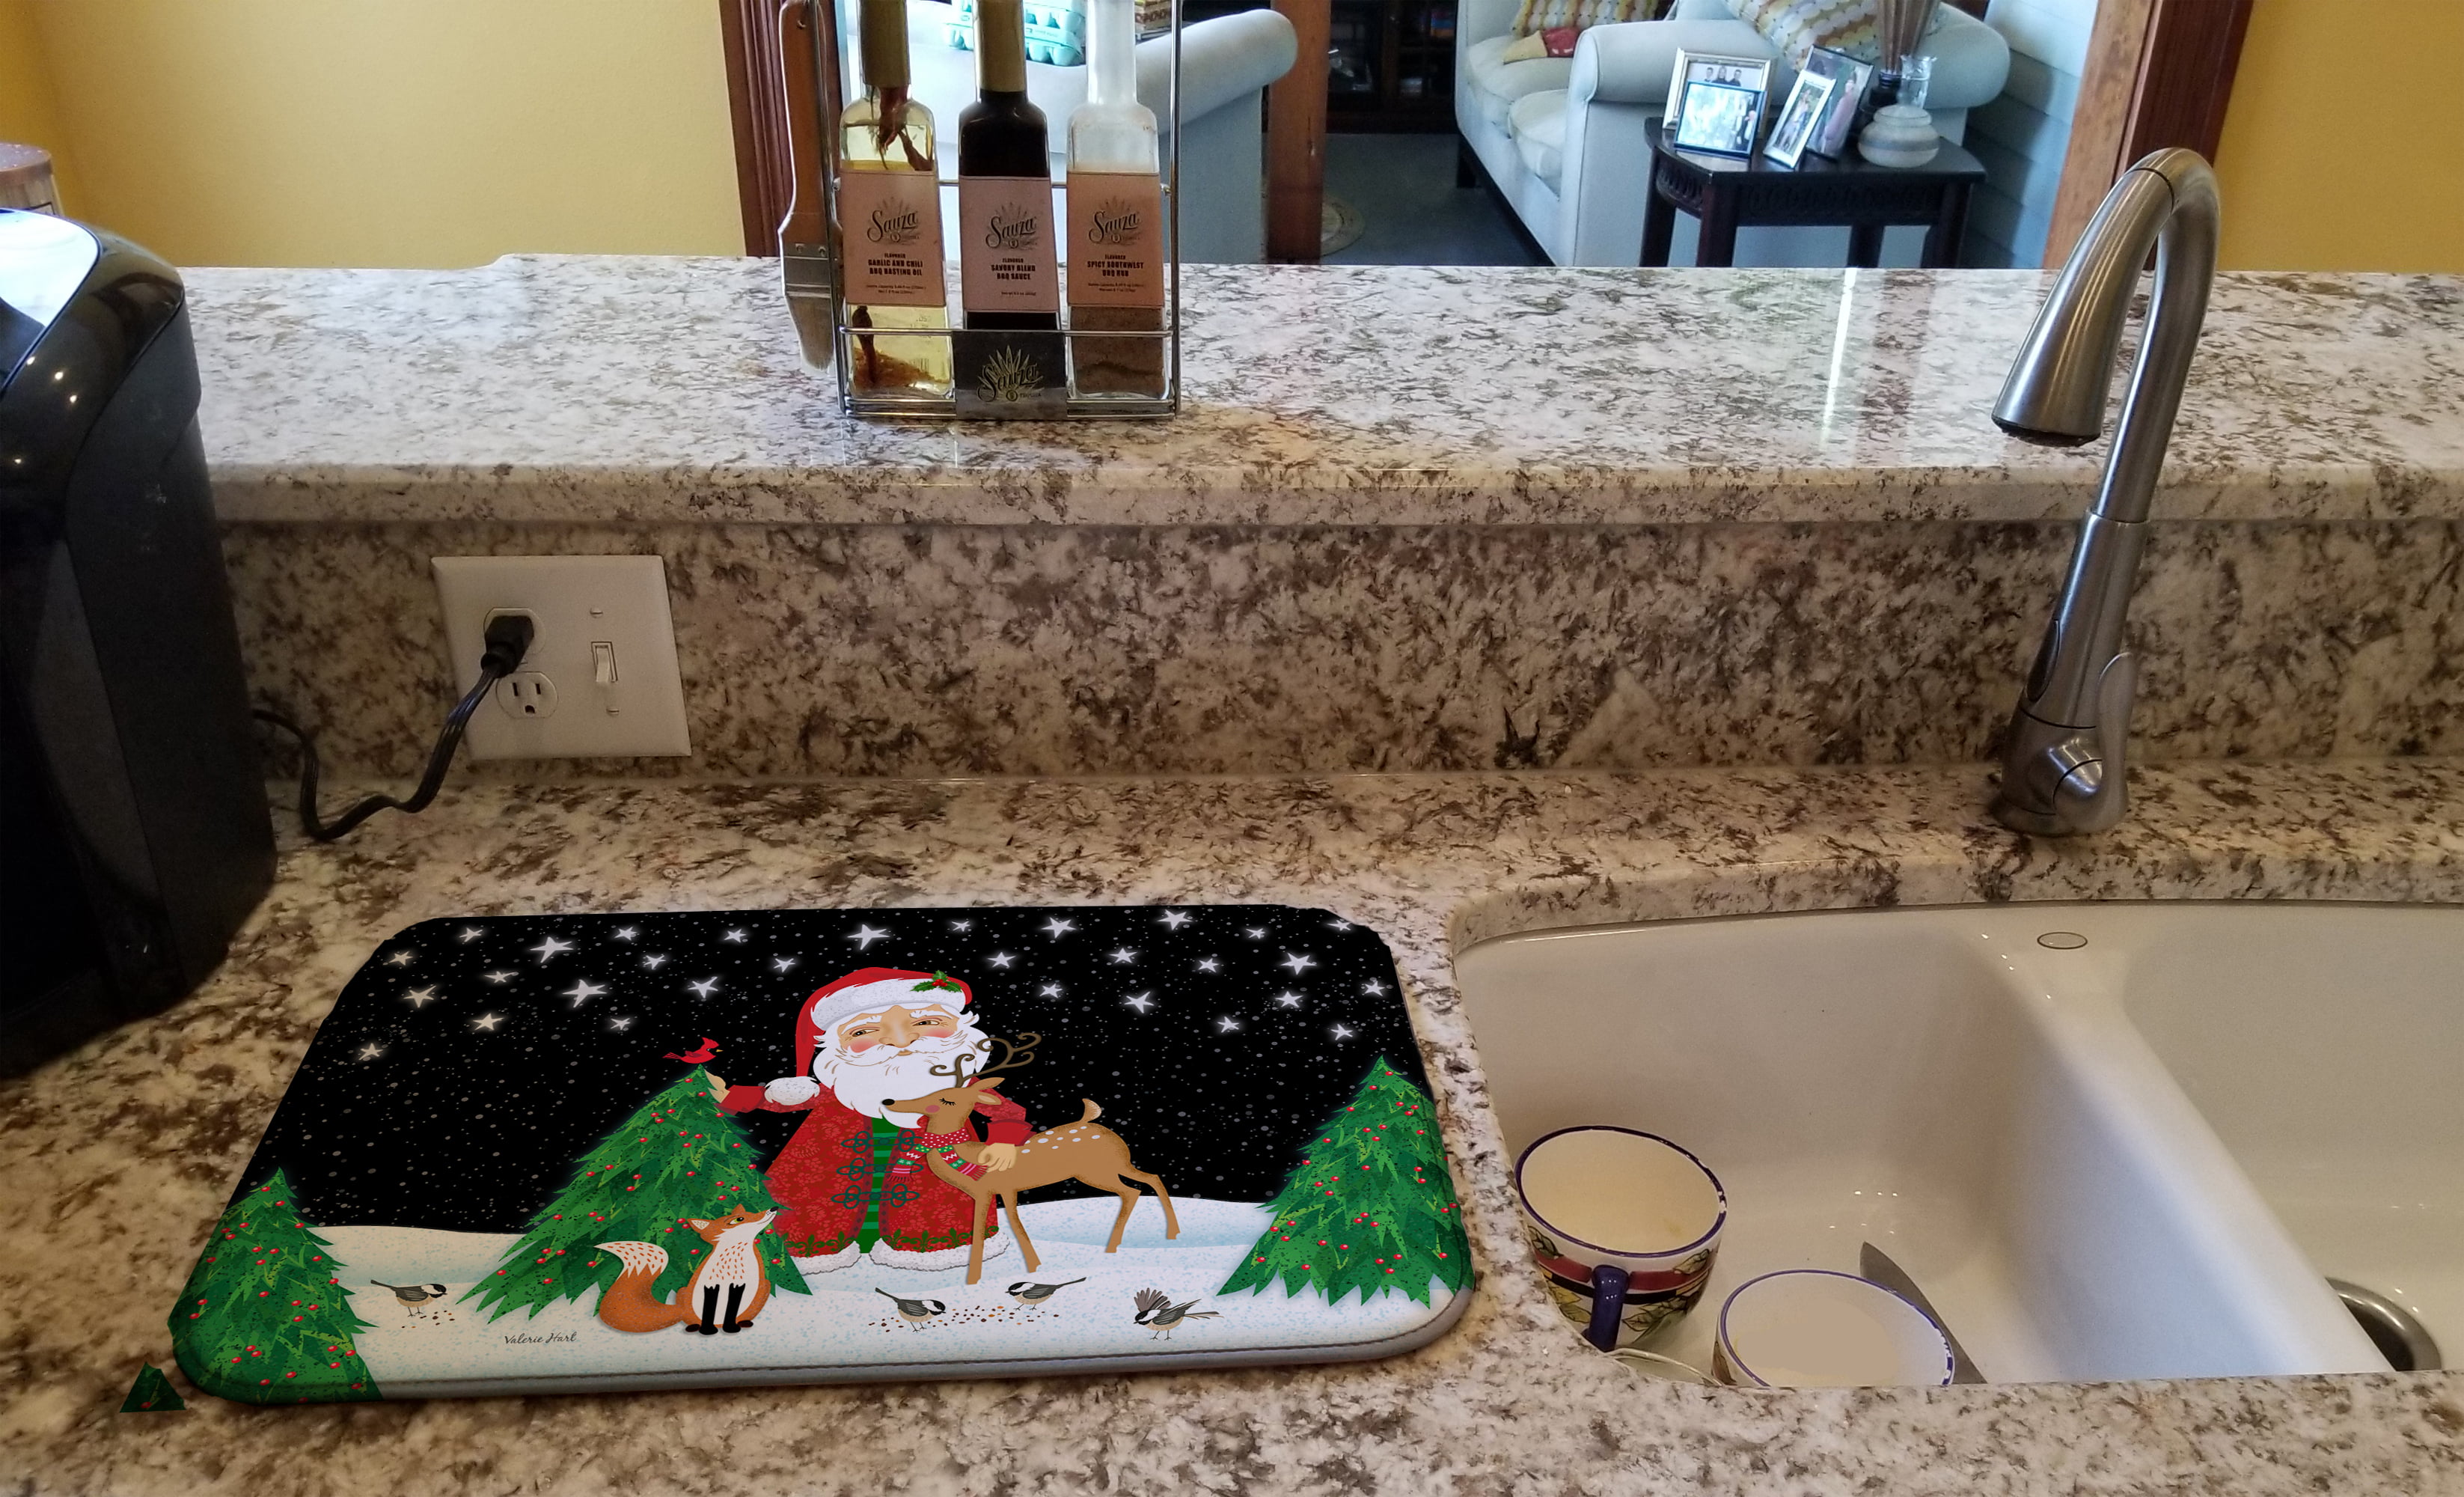  Christmas Dish Drying Mat for Kitchen Counter Gnomes Drying Pad  Absorbent Drying Mats for Countertops Sinks Draining Racks Winter Snowflake  Xmas Tree Balls Grey Xmas Decor 16x18 Inch: Home & Kitchen